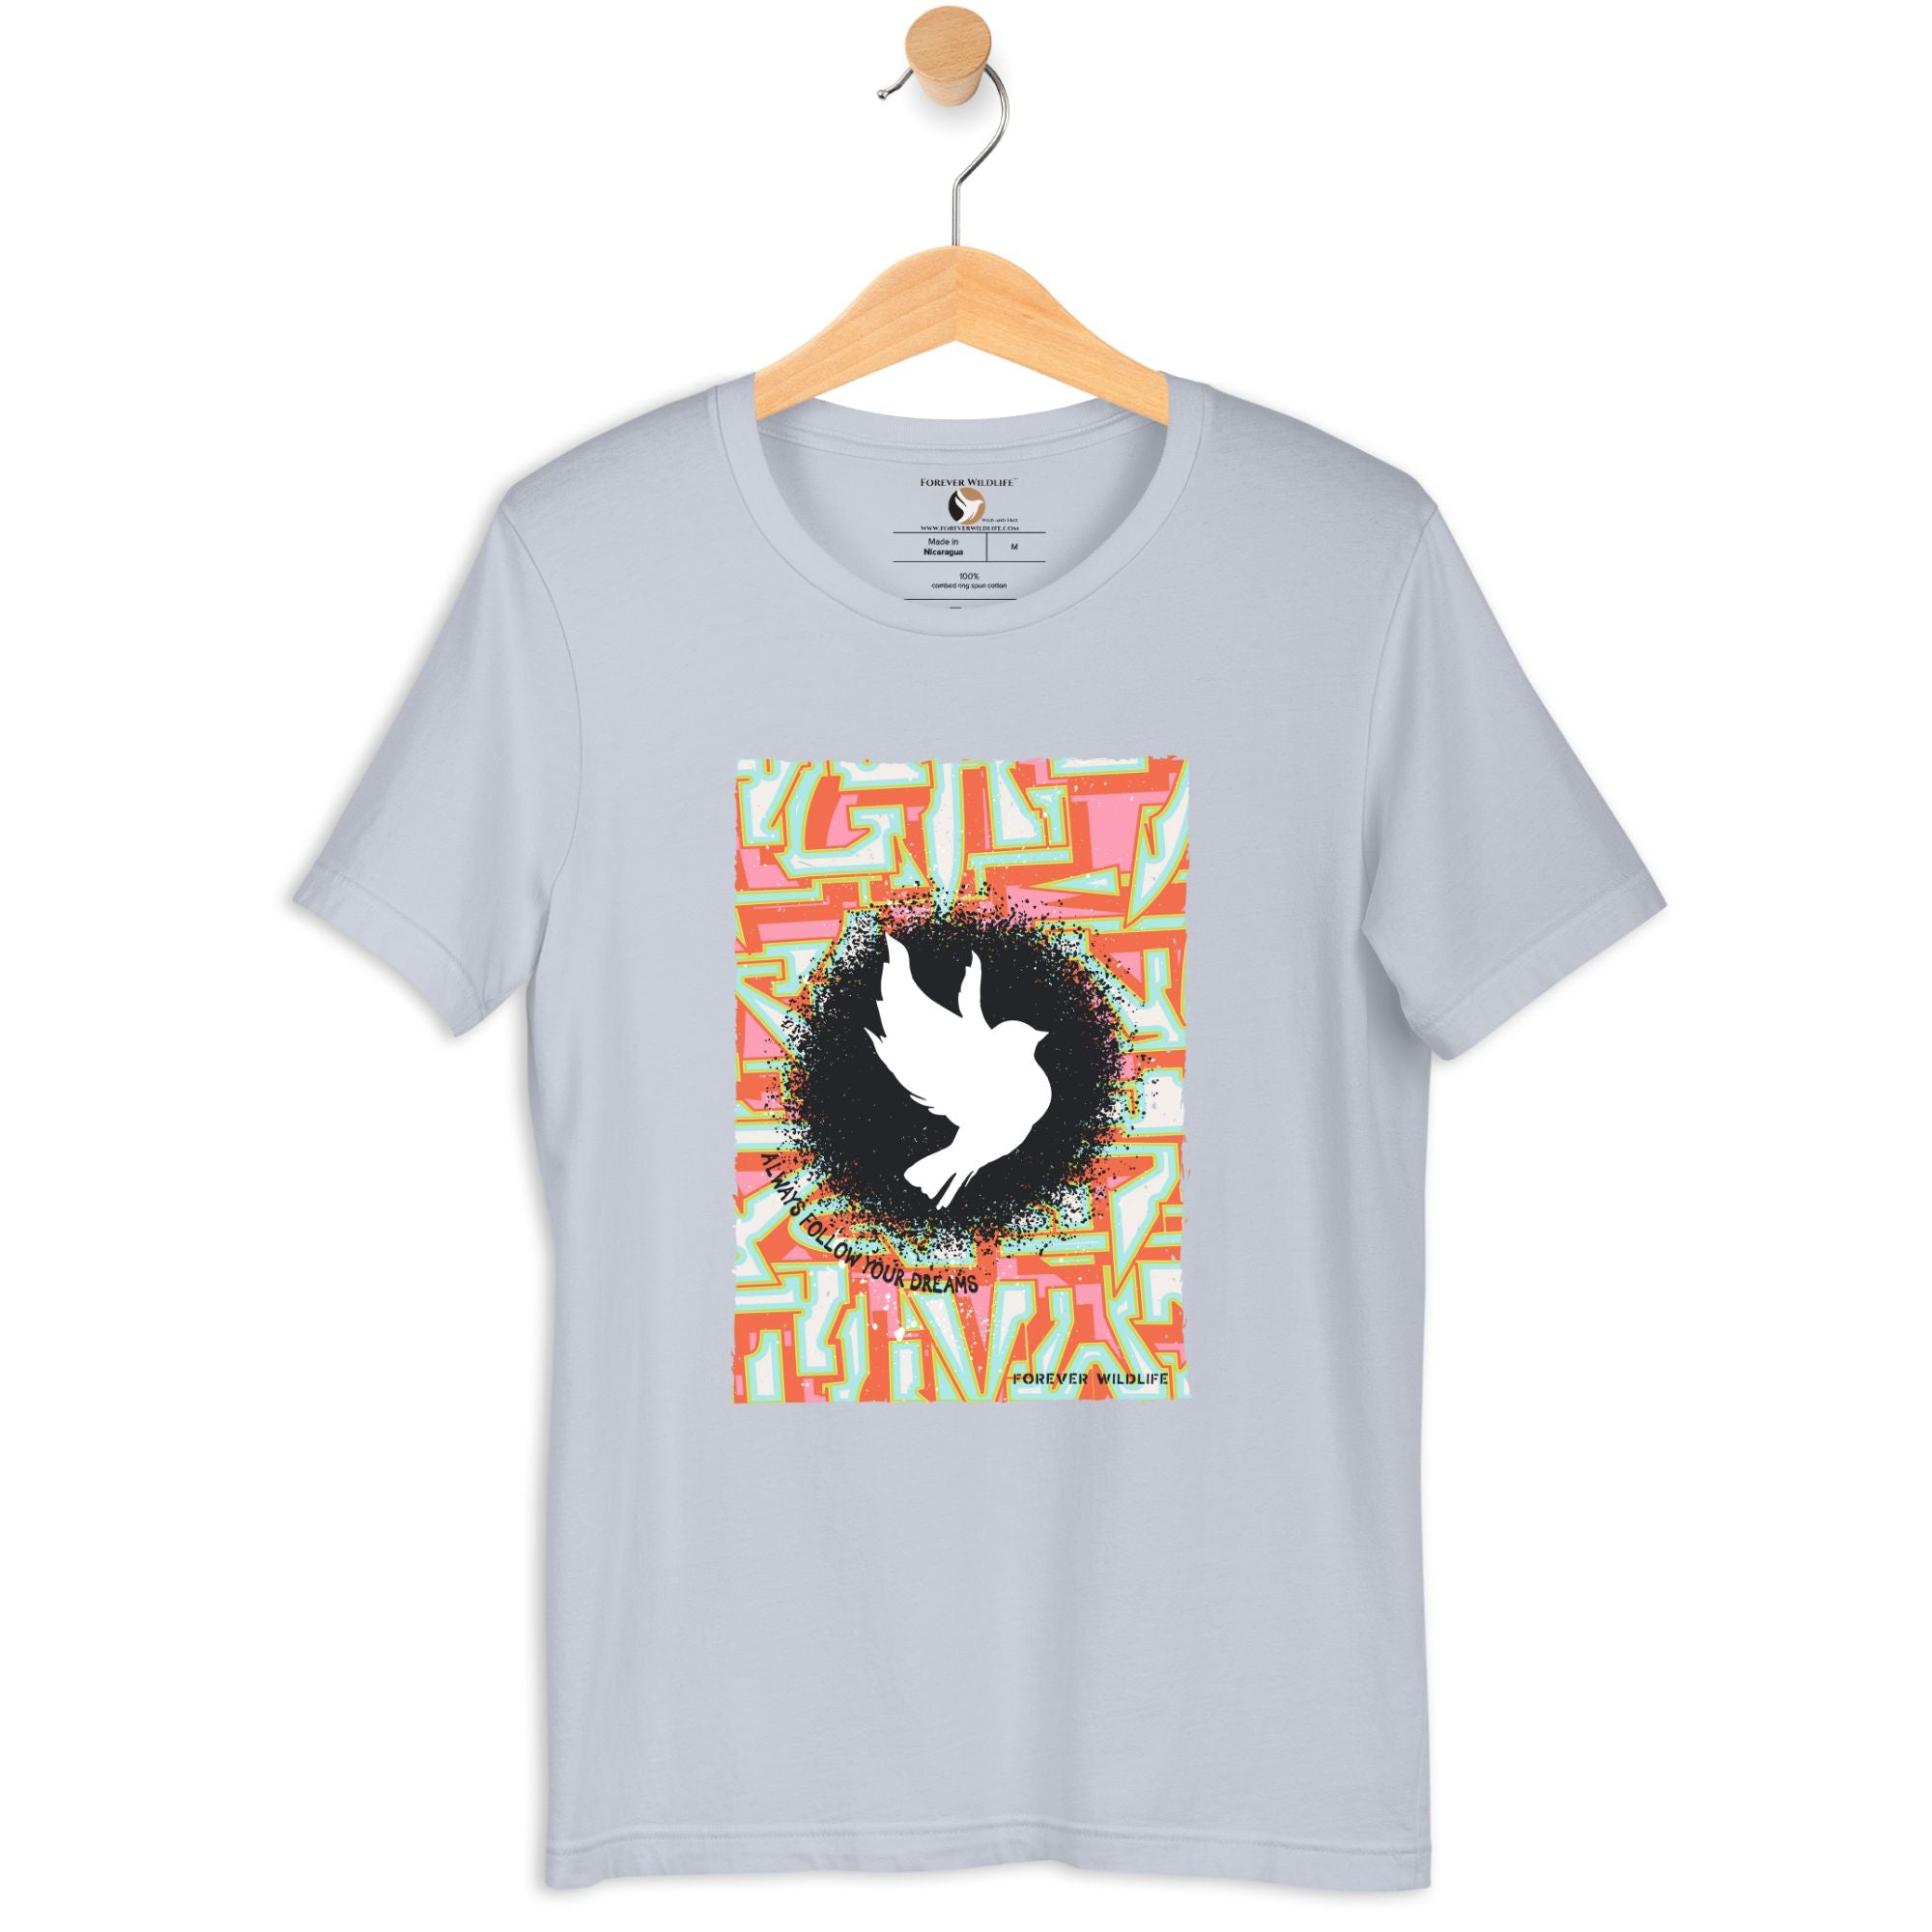 Dove Shirt in Light Blue - High-Quality Wildlife Inspirational T-Shirt Design, Wildlife Clothing from Forever Wildlife